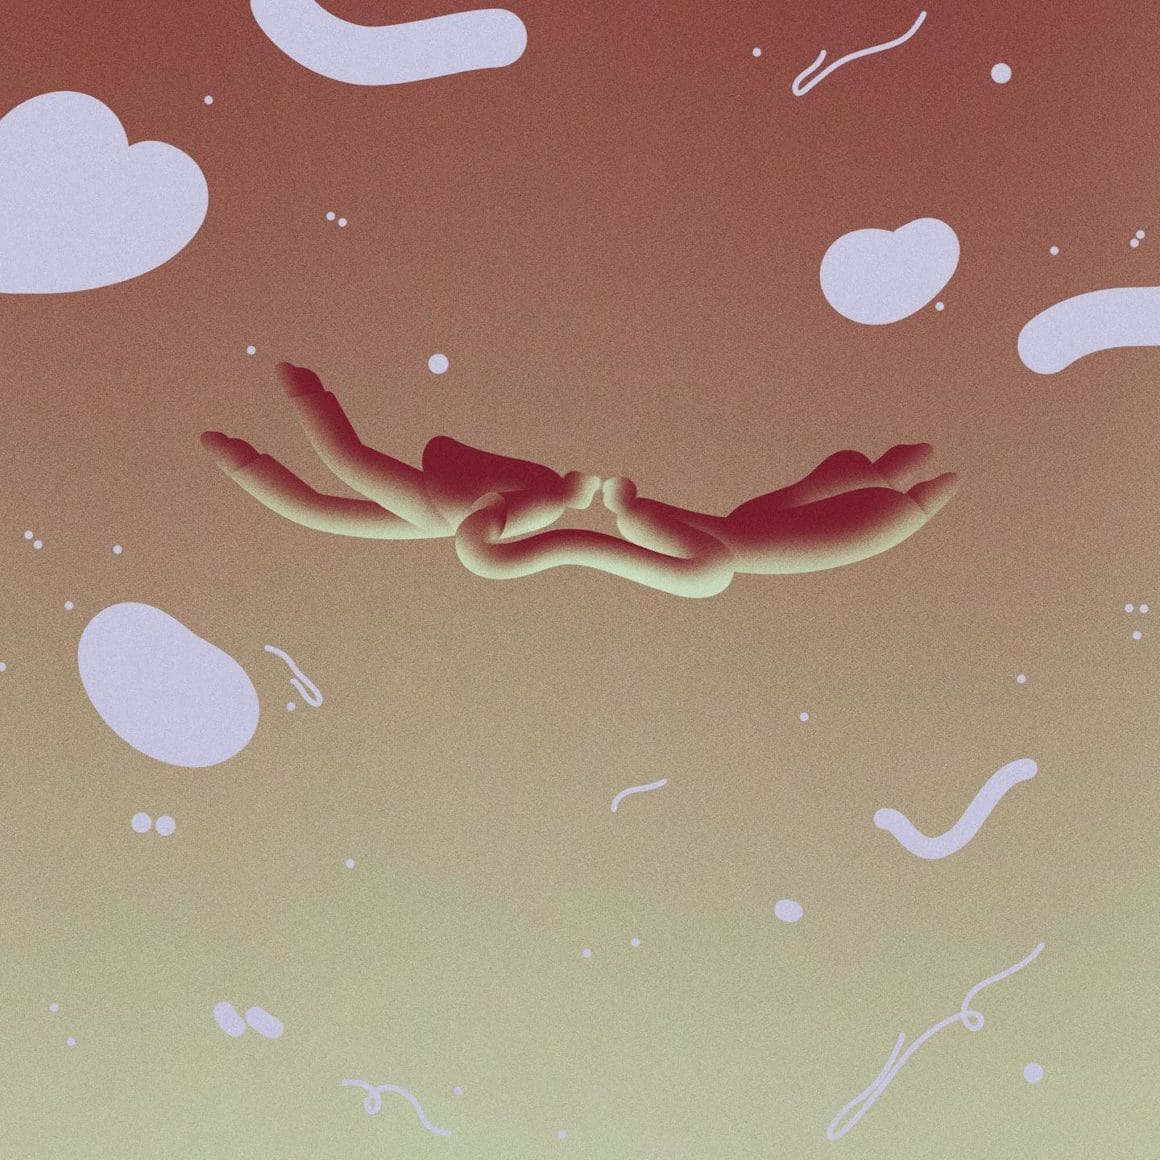 Deux figures nues tombant du ciel, par l'illustratrice Sophi Miyoko Gullbrants.